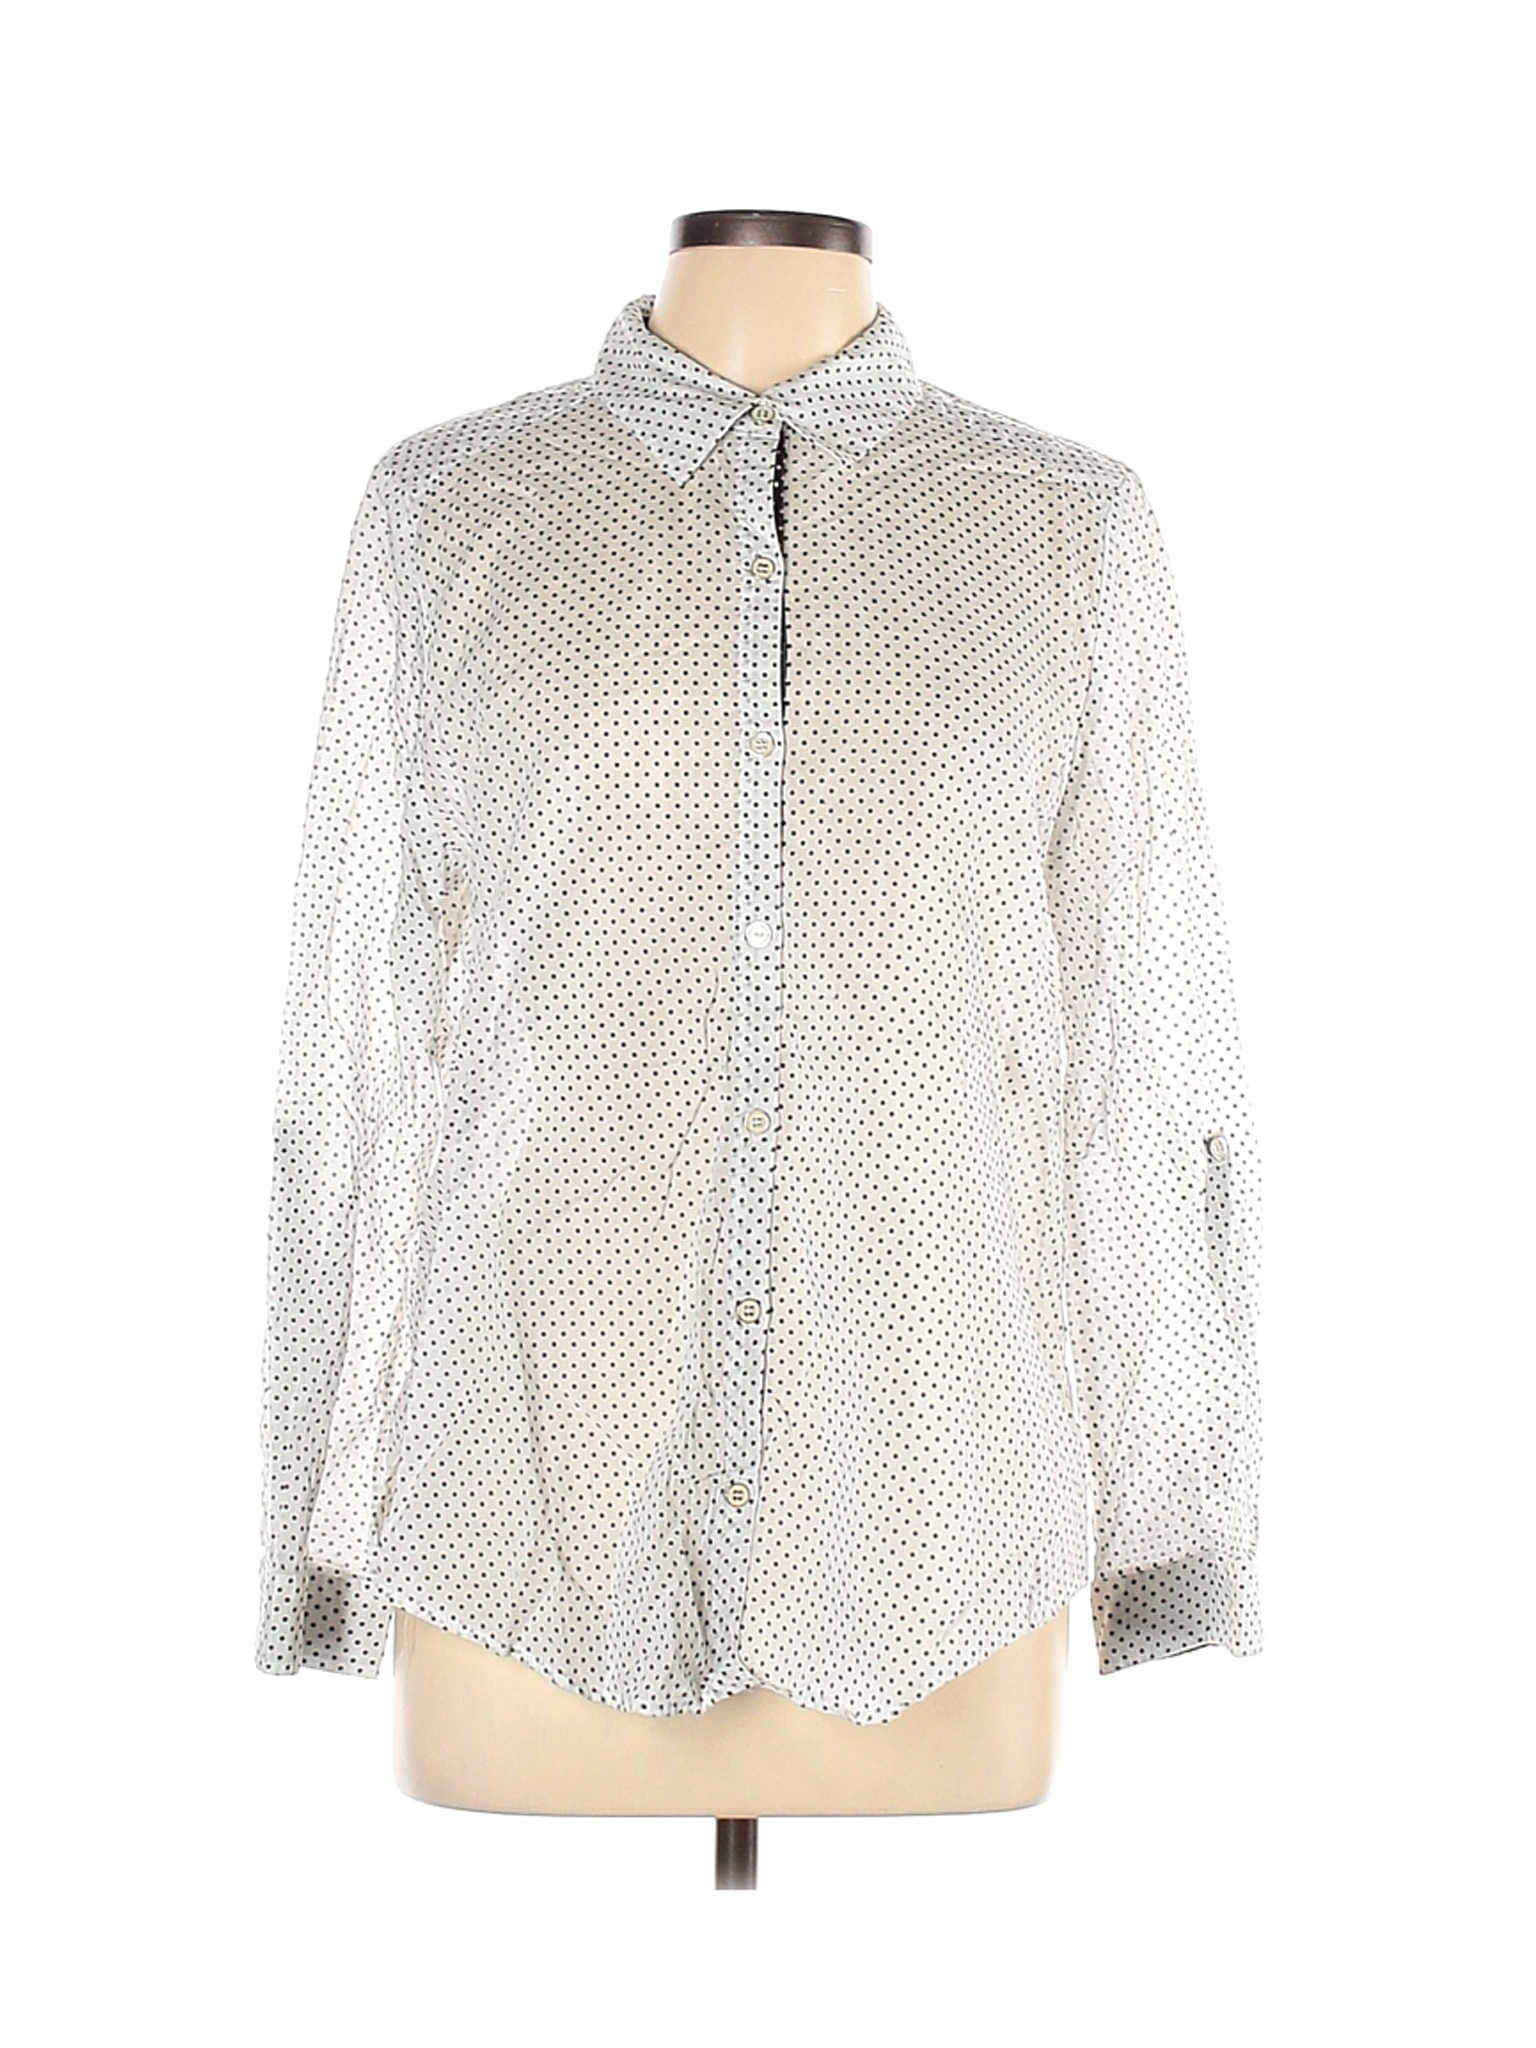 Chico's Women White Long Sleeve Button-Down Shirt L | eBay